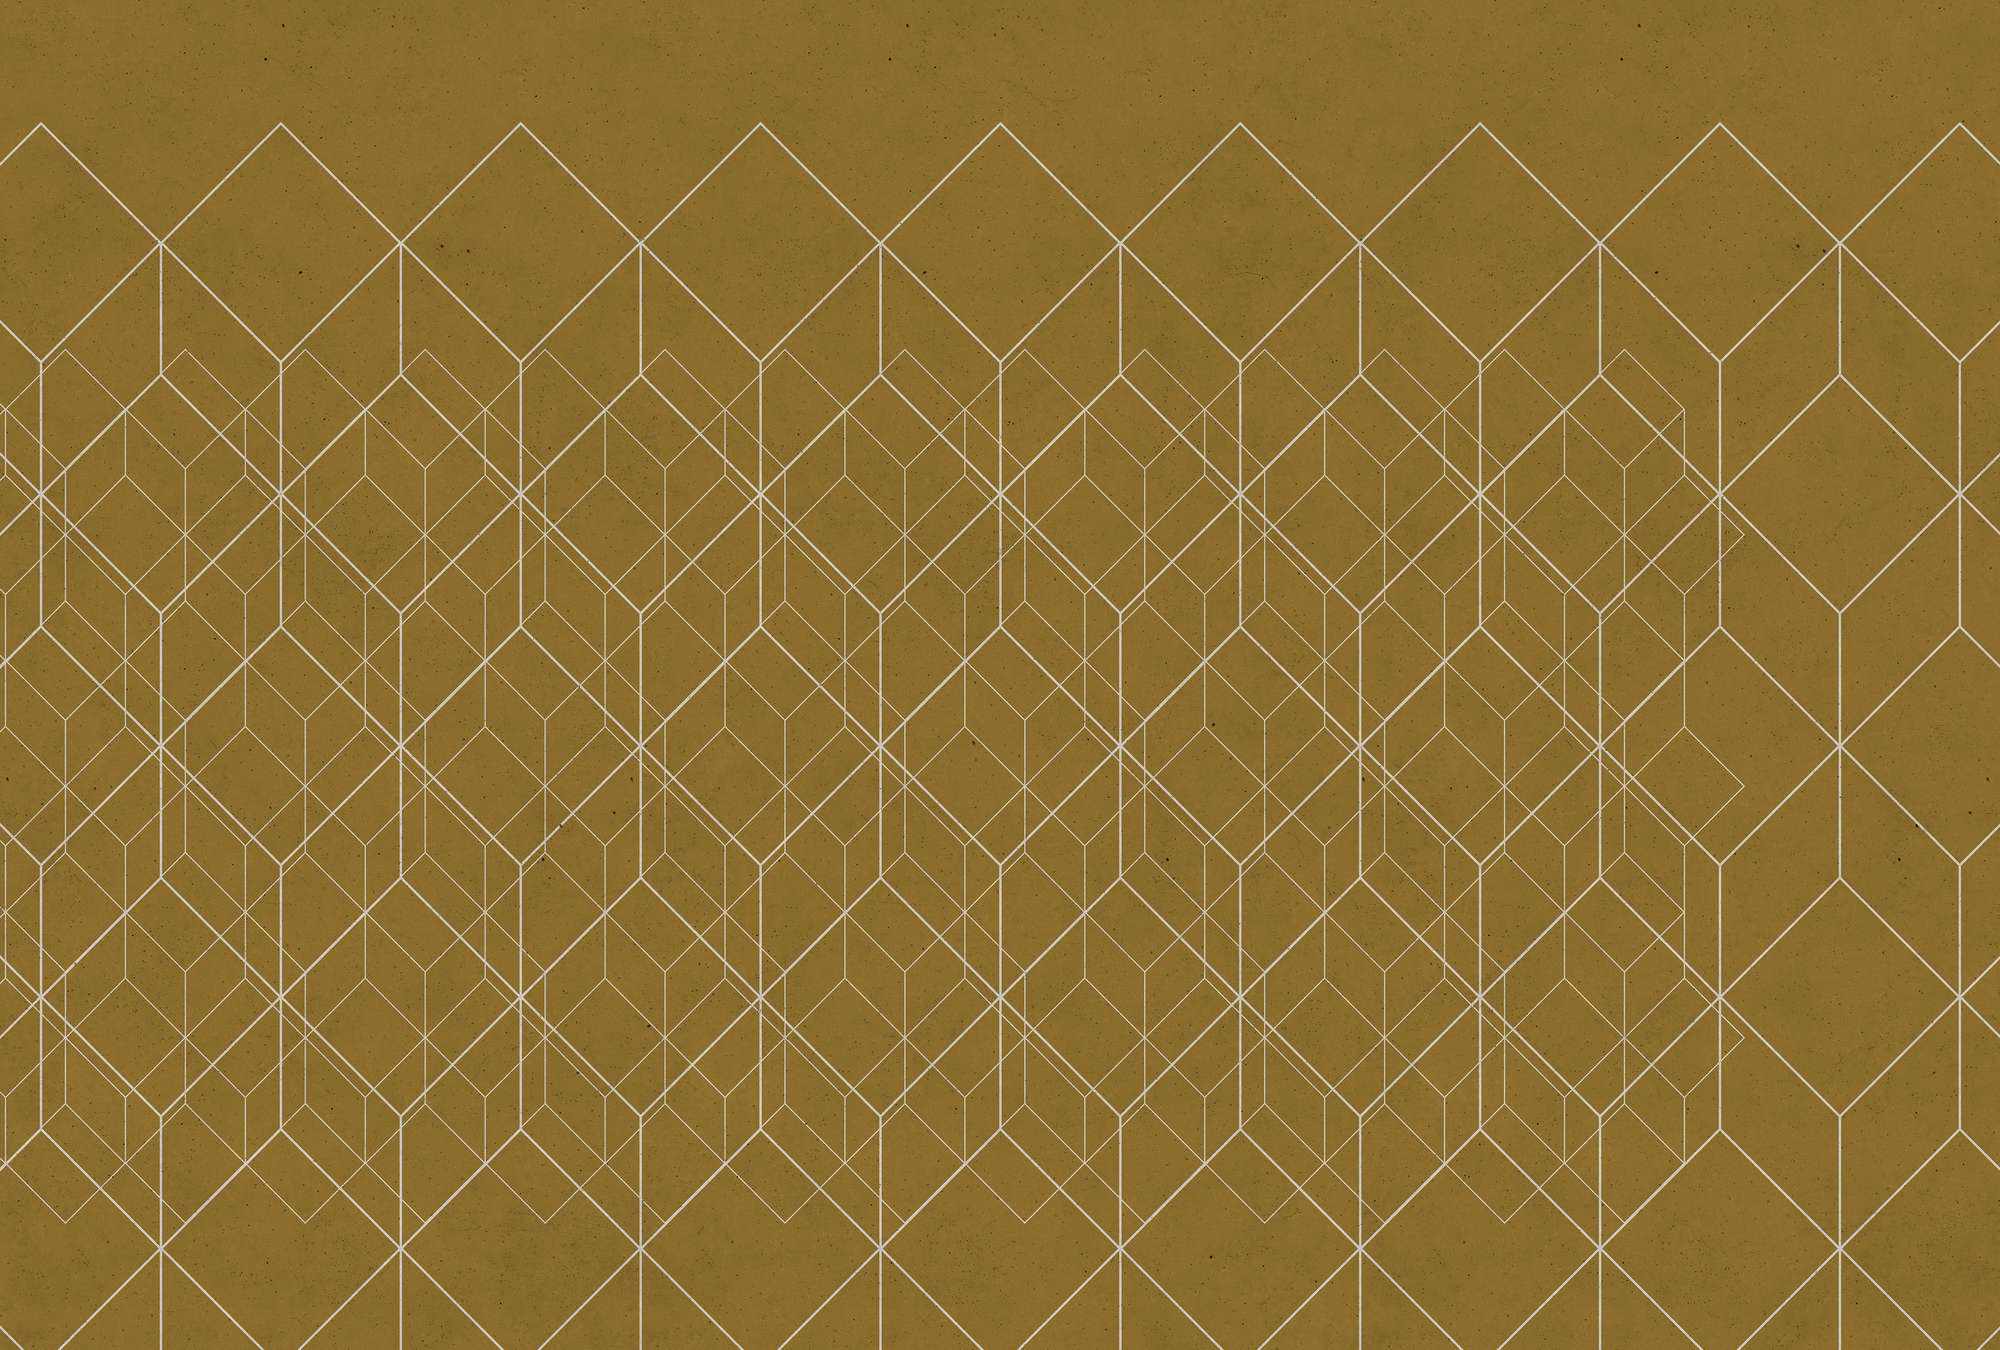             Photo wallpaper geometric pattern - Walls by Patel
        